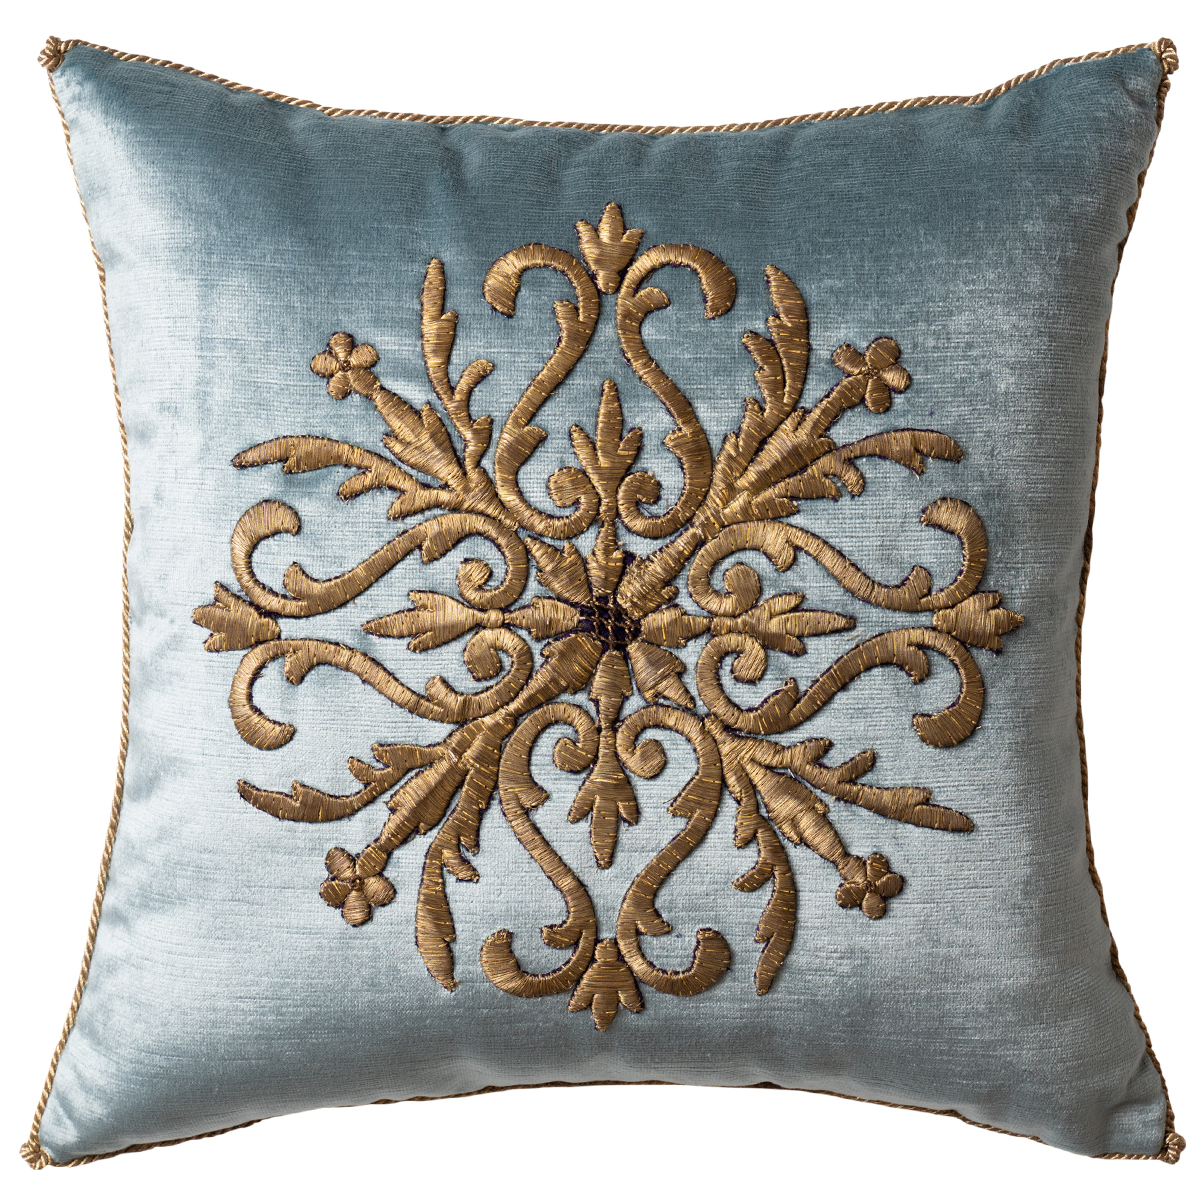 Ottoman Embroidery Patterns 15 X 15 Antique Ottoman Empire Raised Gold Metallic Embroidery Pillow E051319